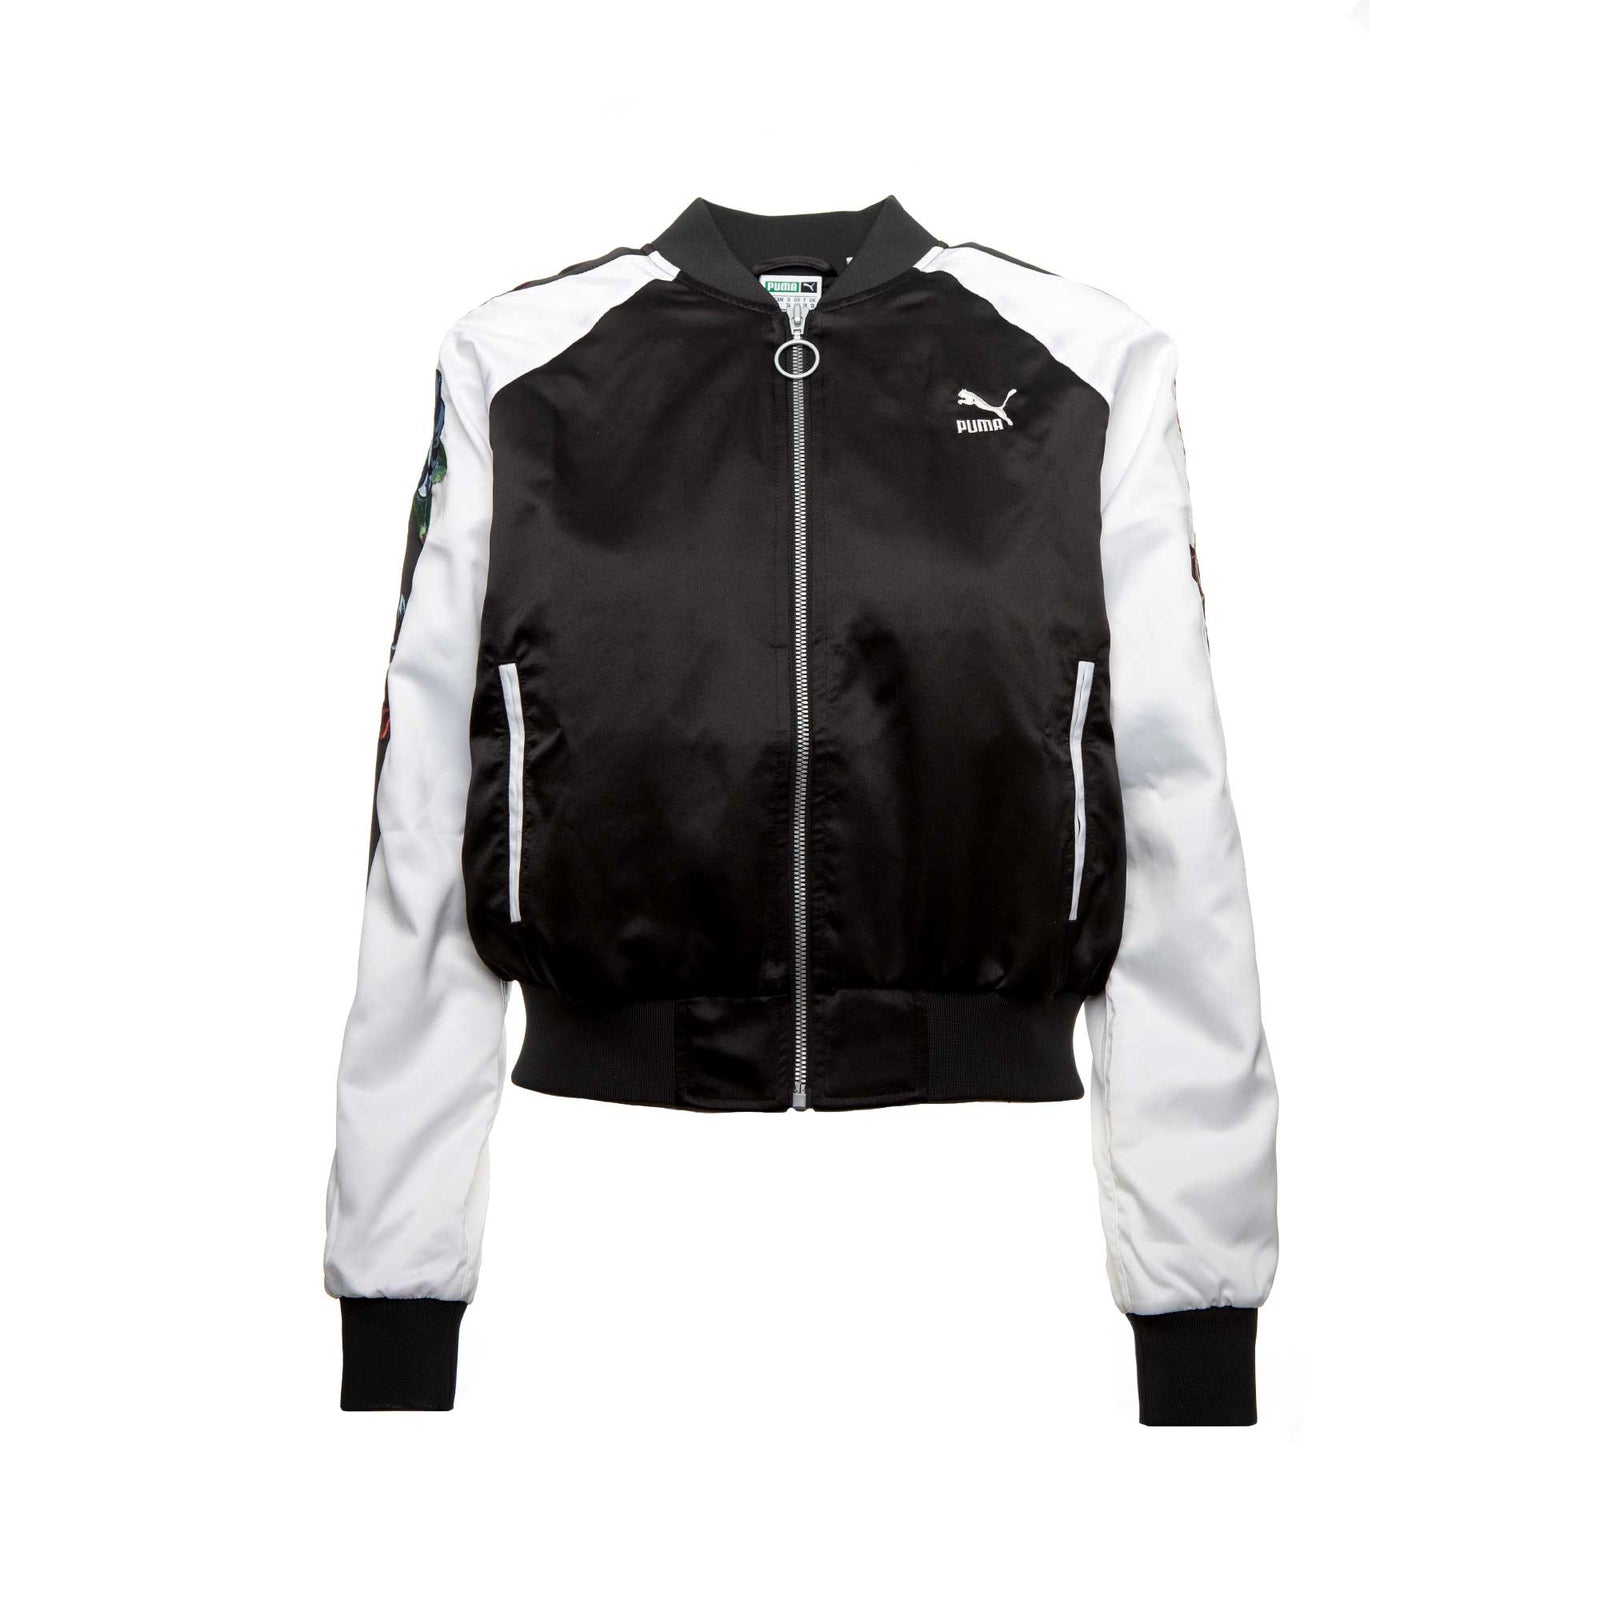 puma premium archive t7 jacket